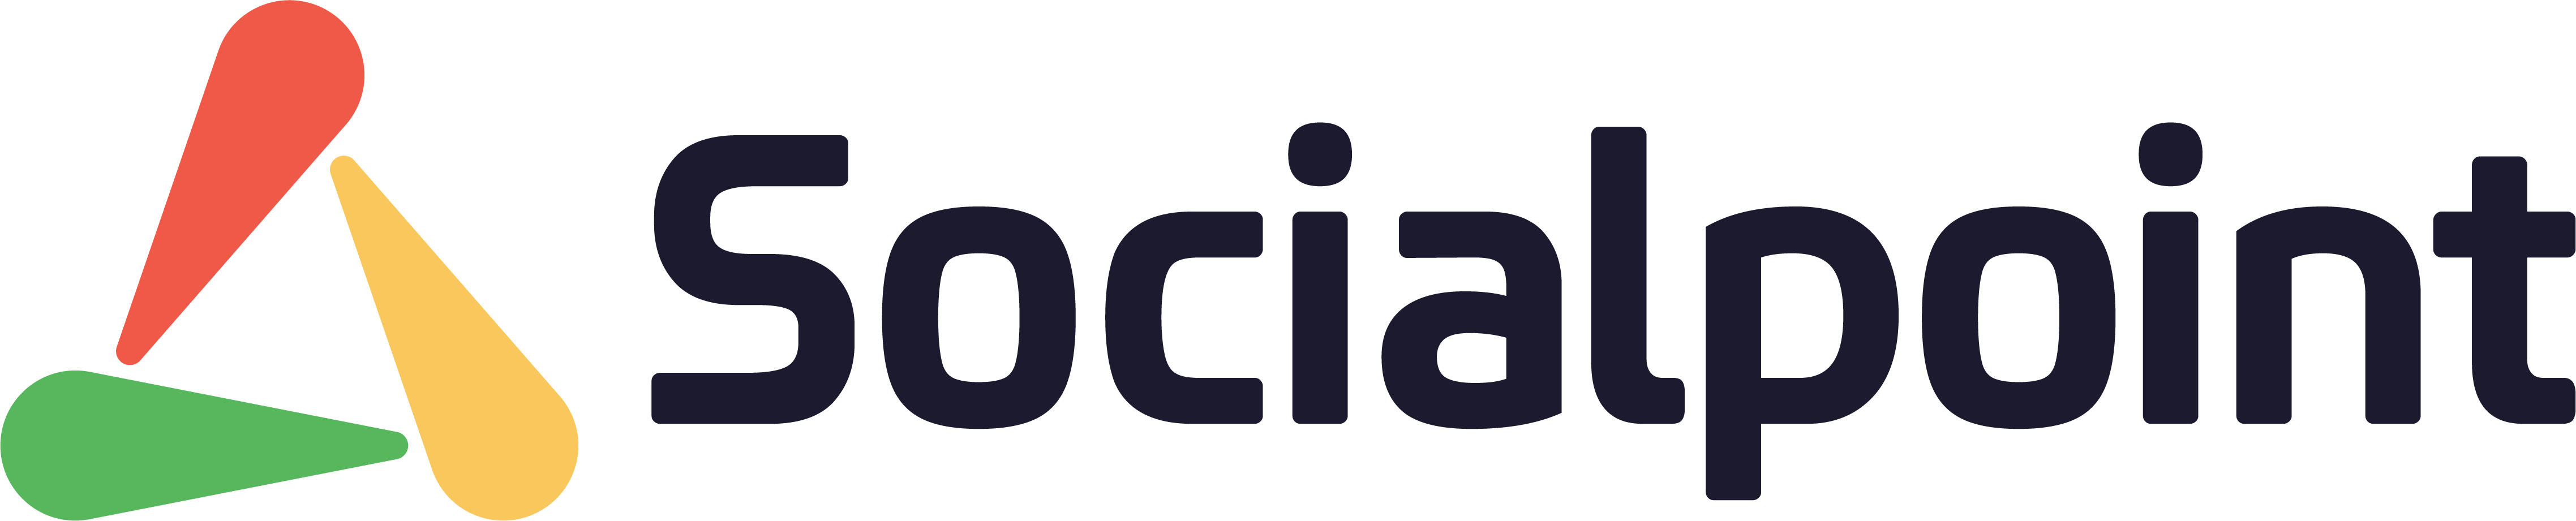 social point logo